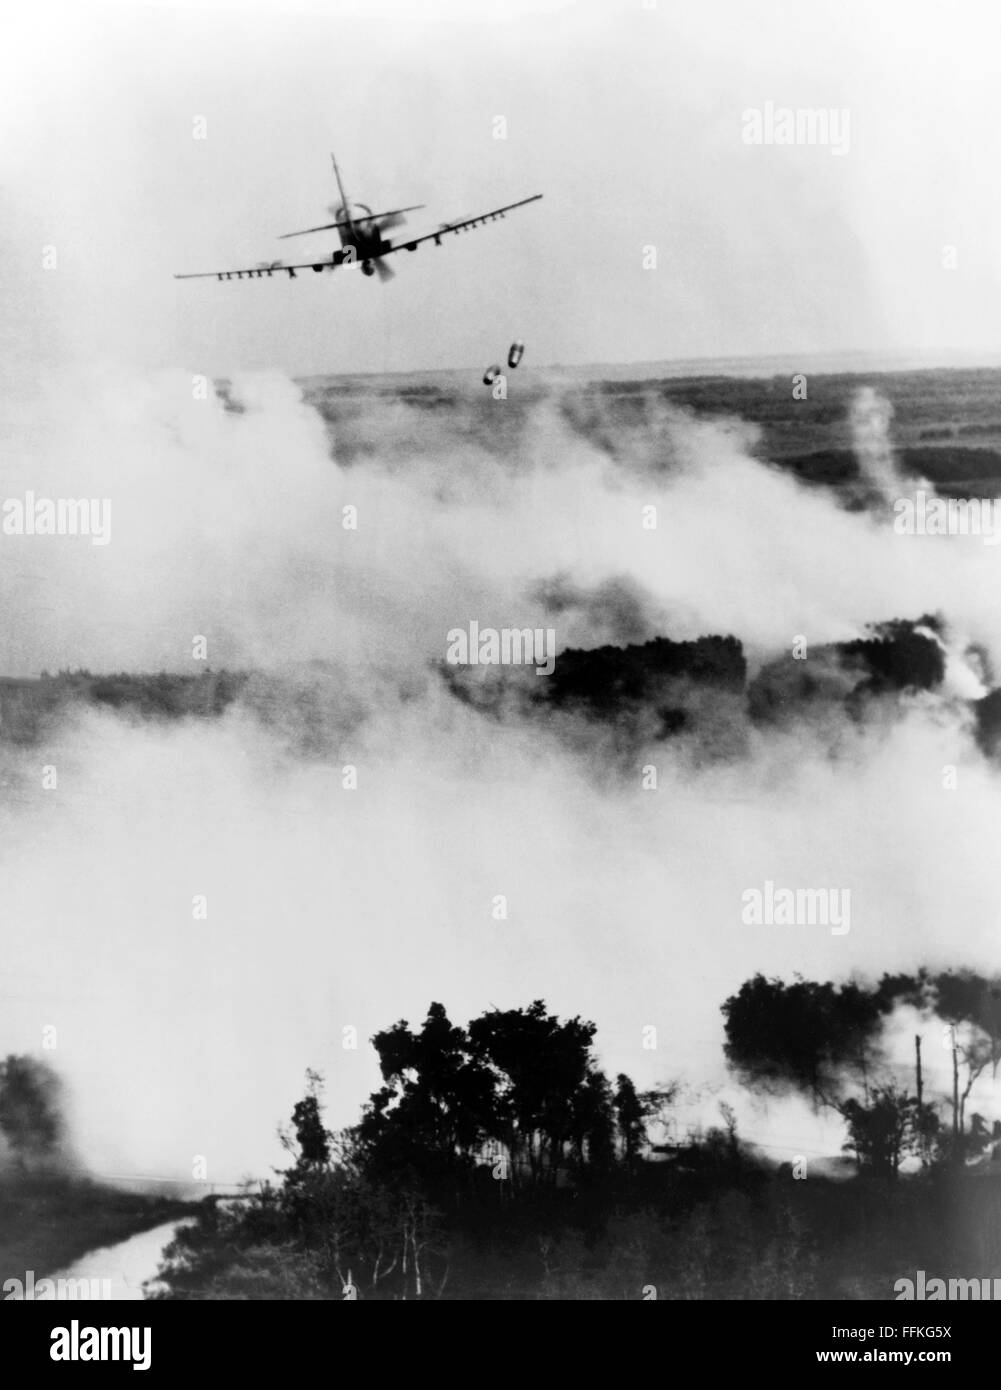 Vietnam War. Vietnamese Air Force A-1E Skyraider bombing a Viet Cong hideout near Cantho, South Vietnam during the Vietnam War. Photo c.1967 by USAF. Stock Photo